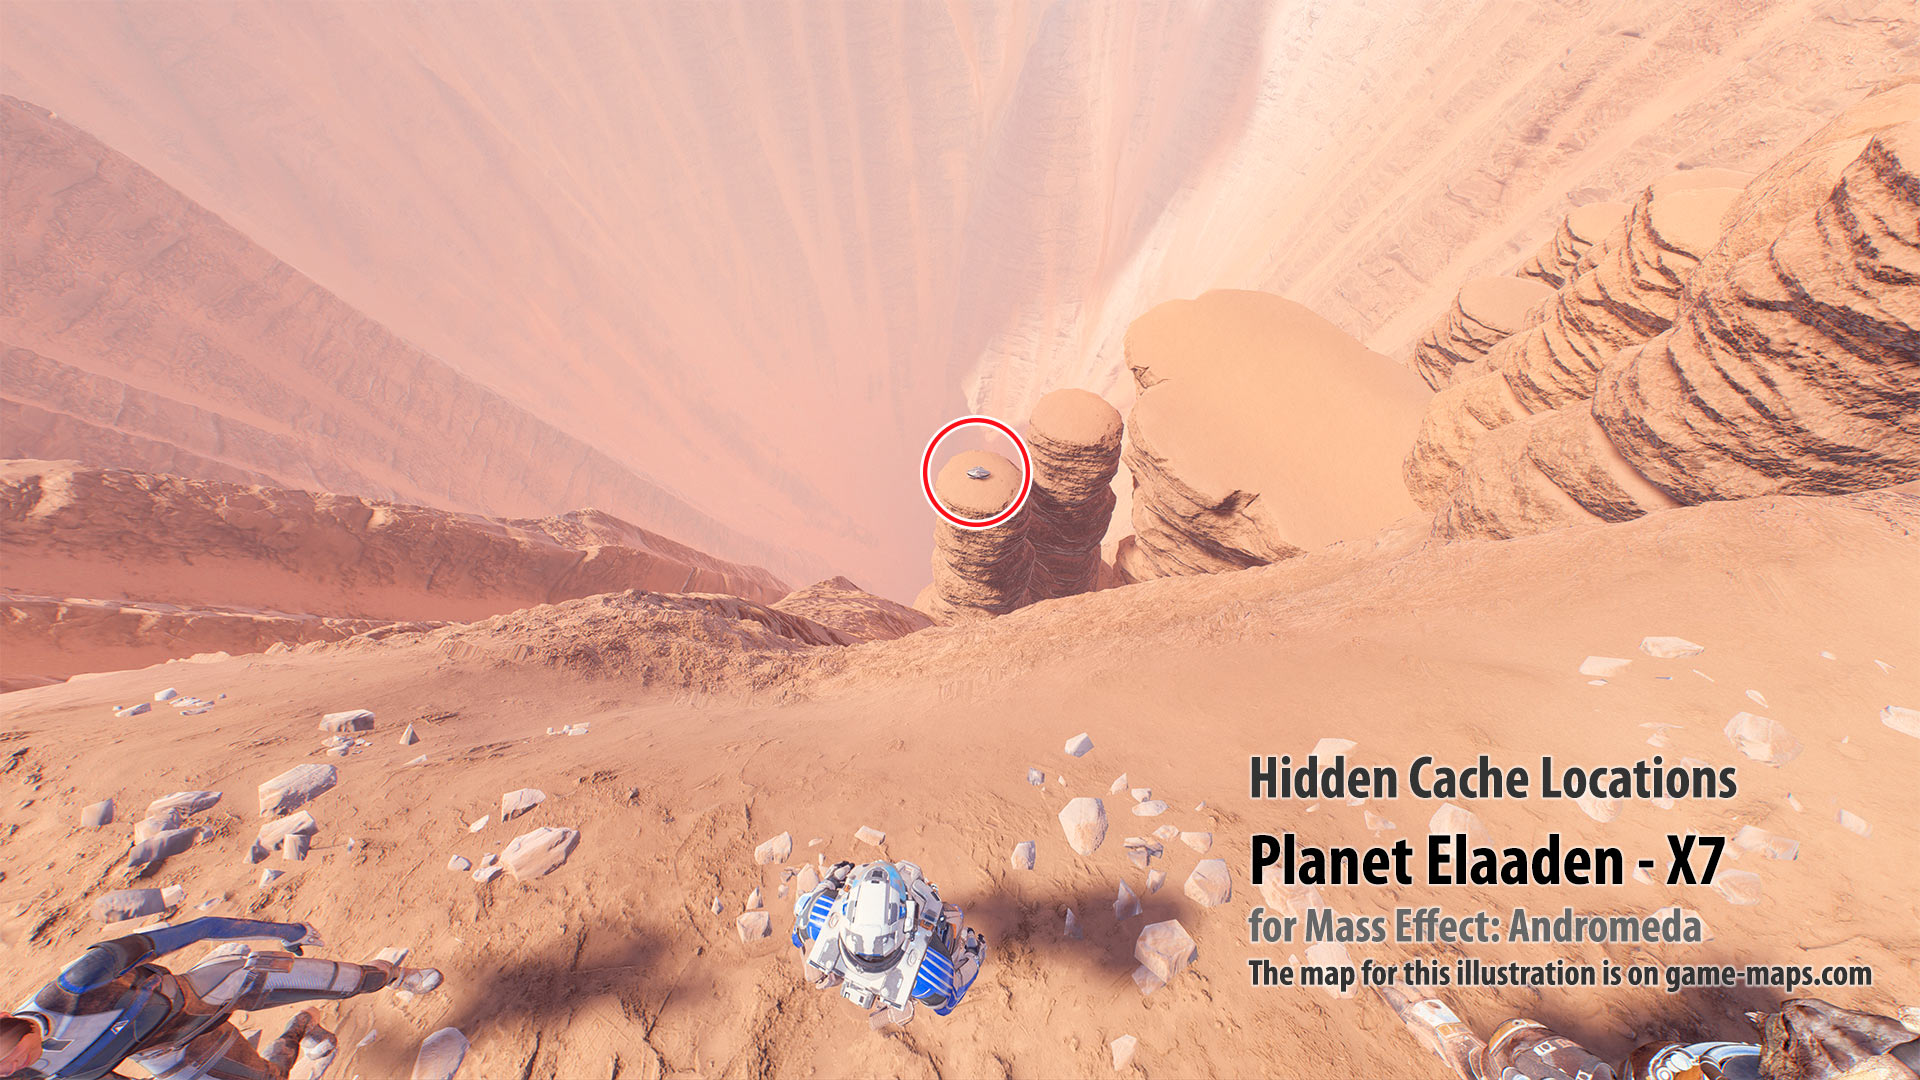 Hidden Cache - Planet Elaaden-X7 - Mass Effect Andromeda.